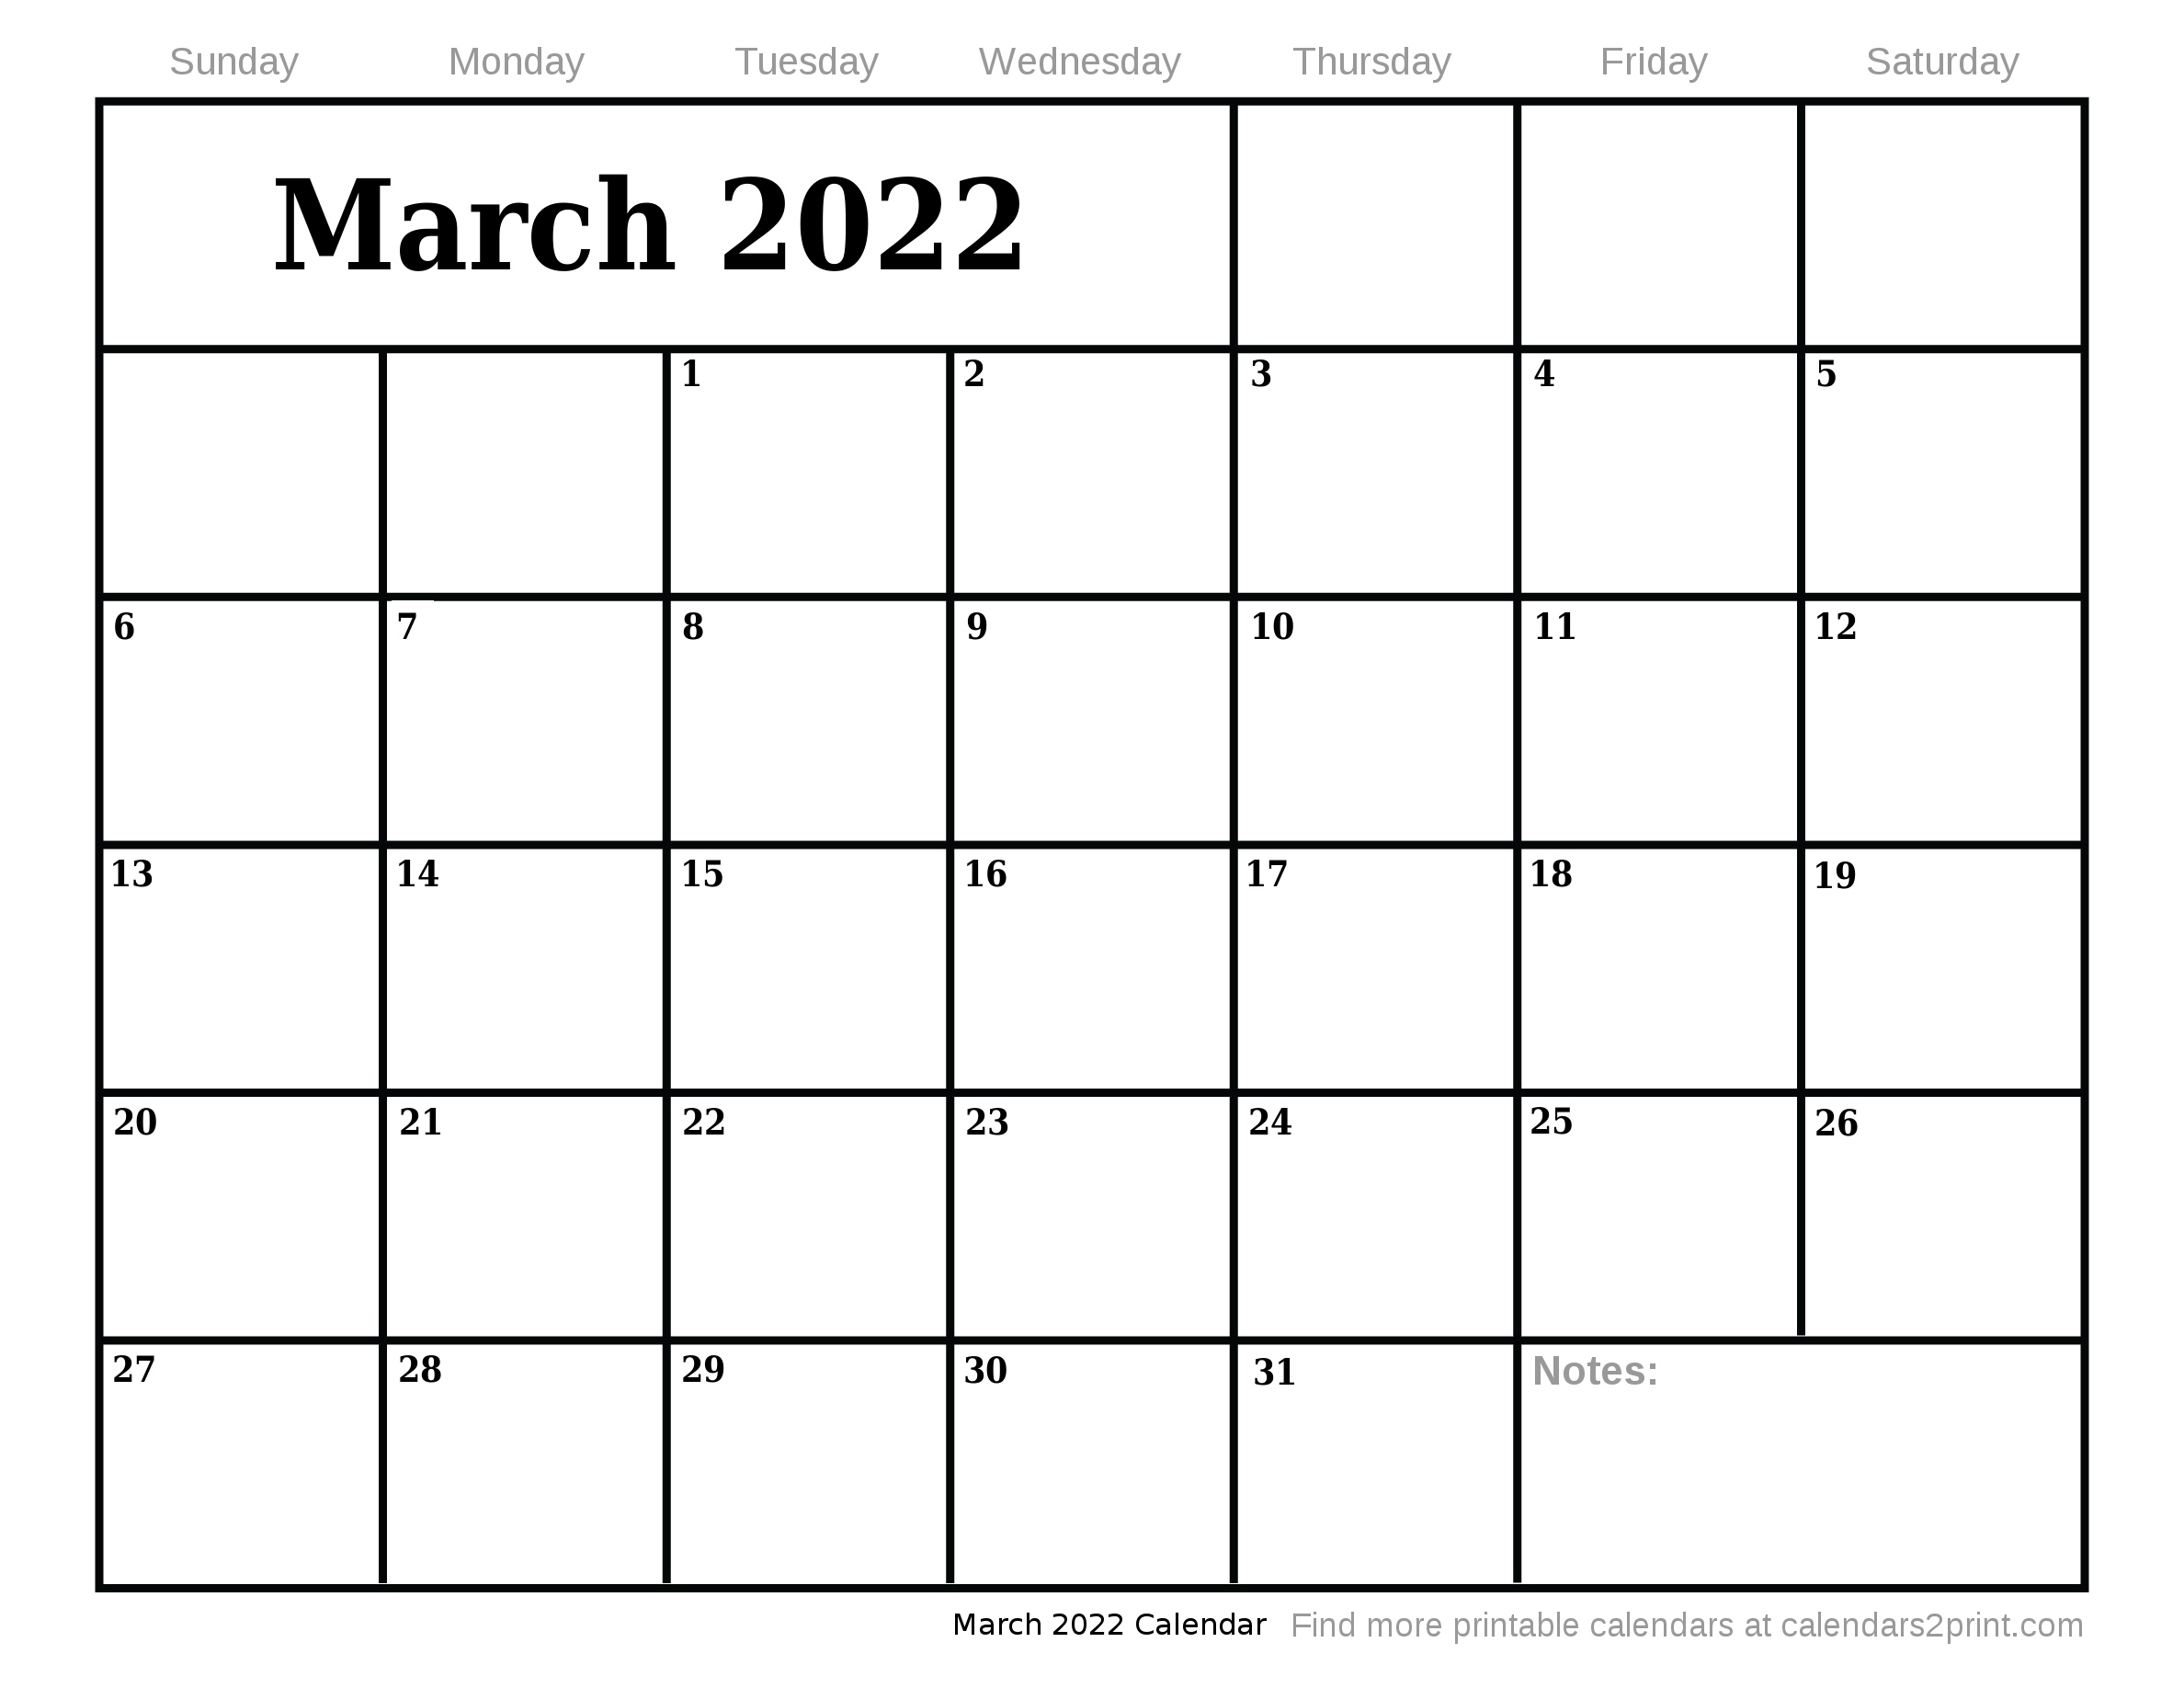 Mar 2022 Printable Calendar